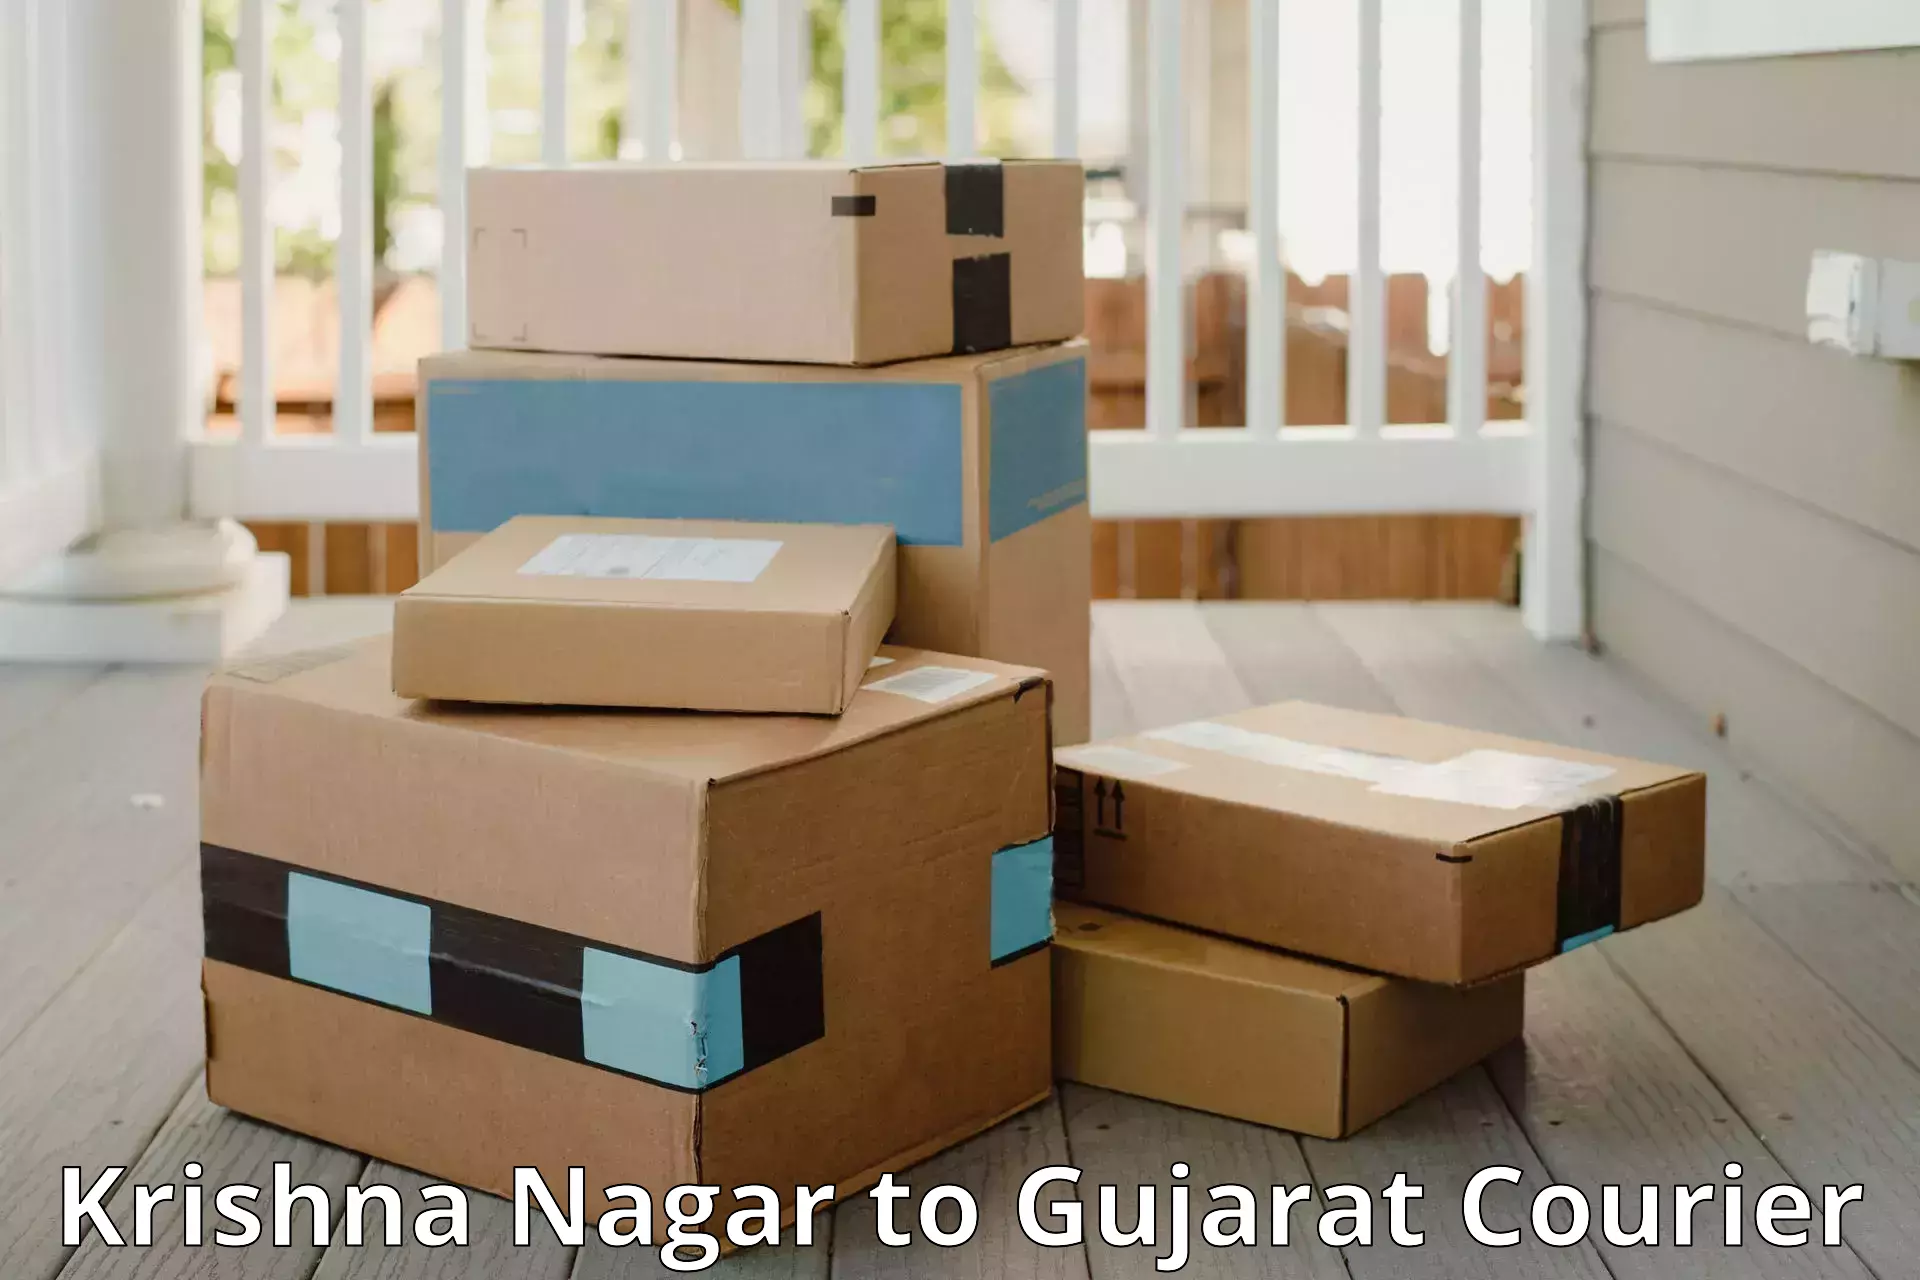 Luggage shipping specialists Krishna Nagar to Ahmedabad